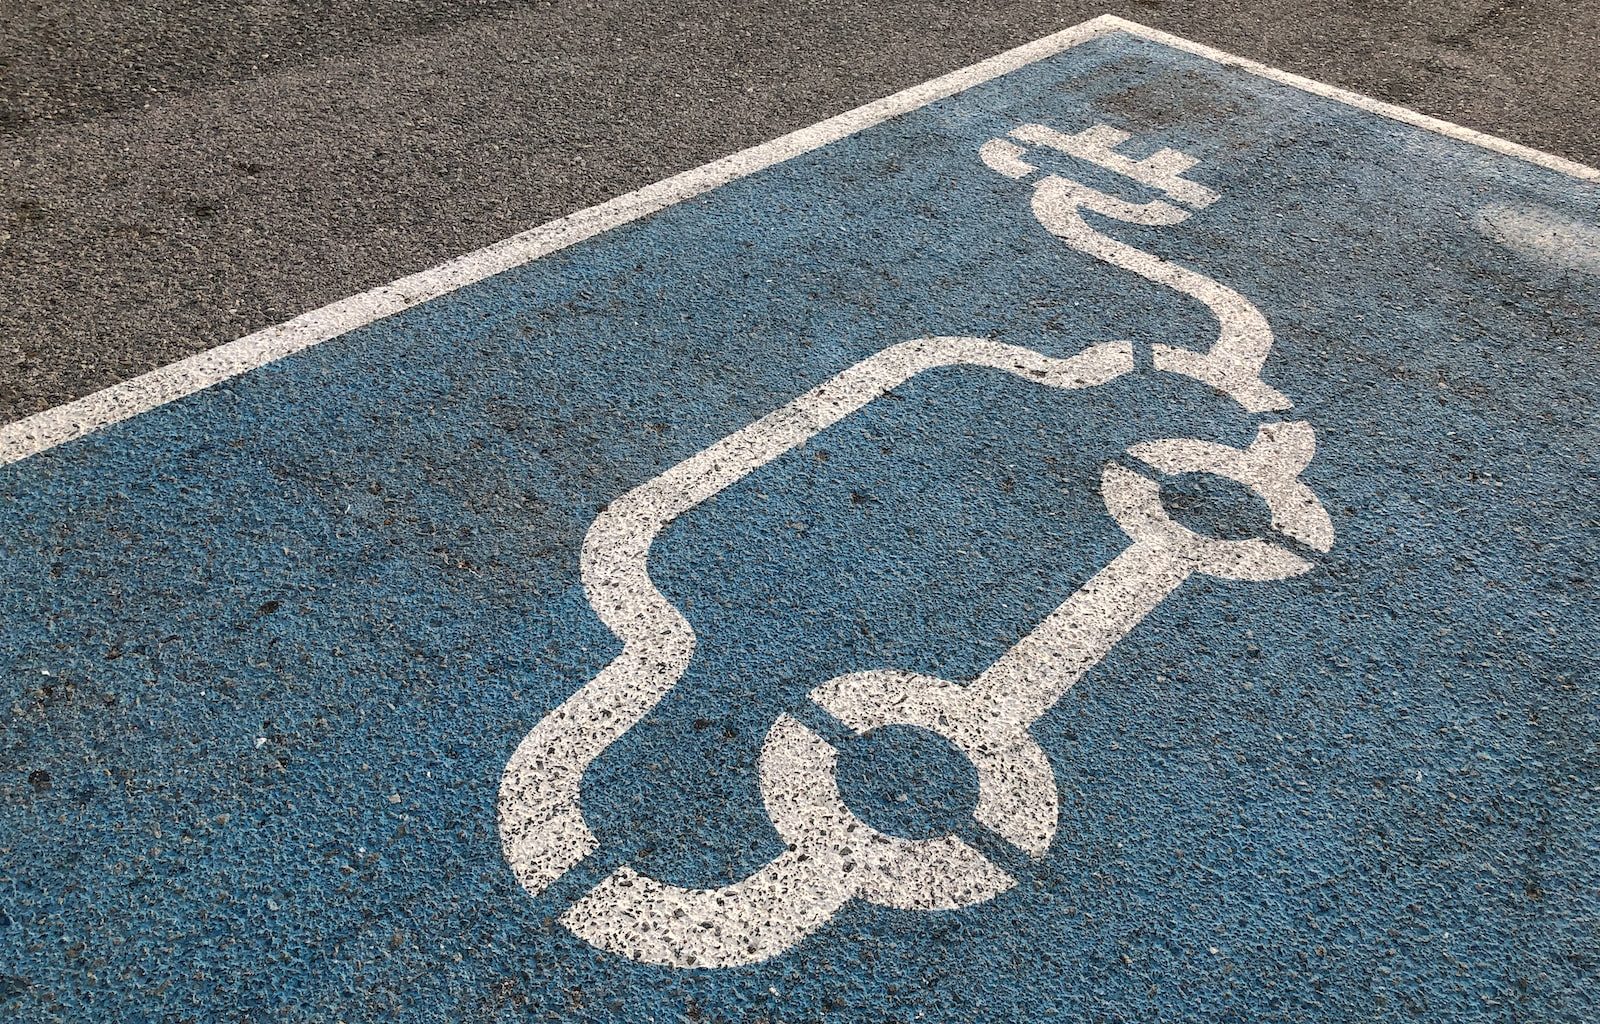 blue and white heart print on gray asphalt road